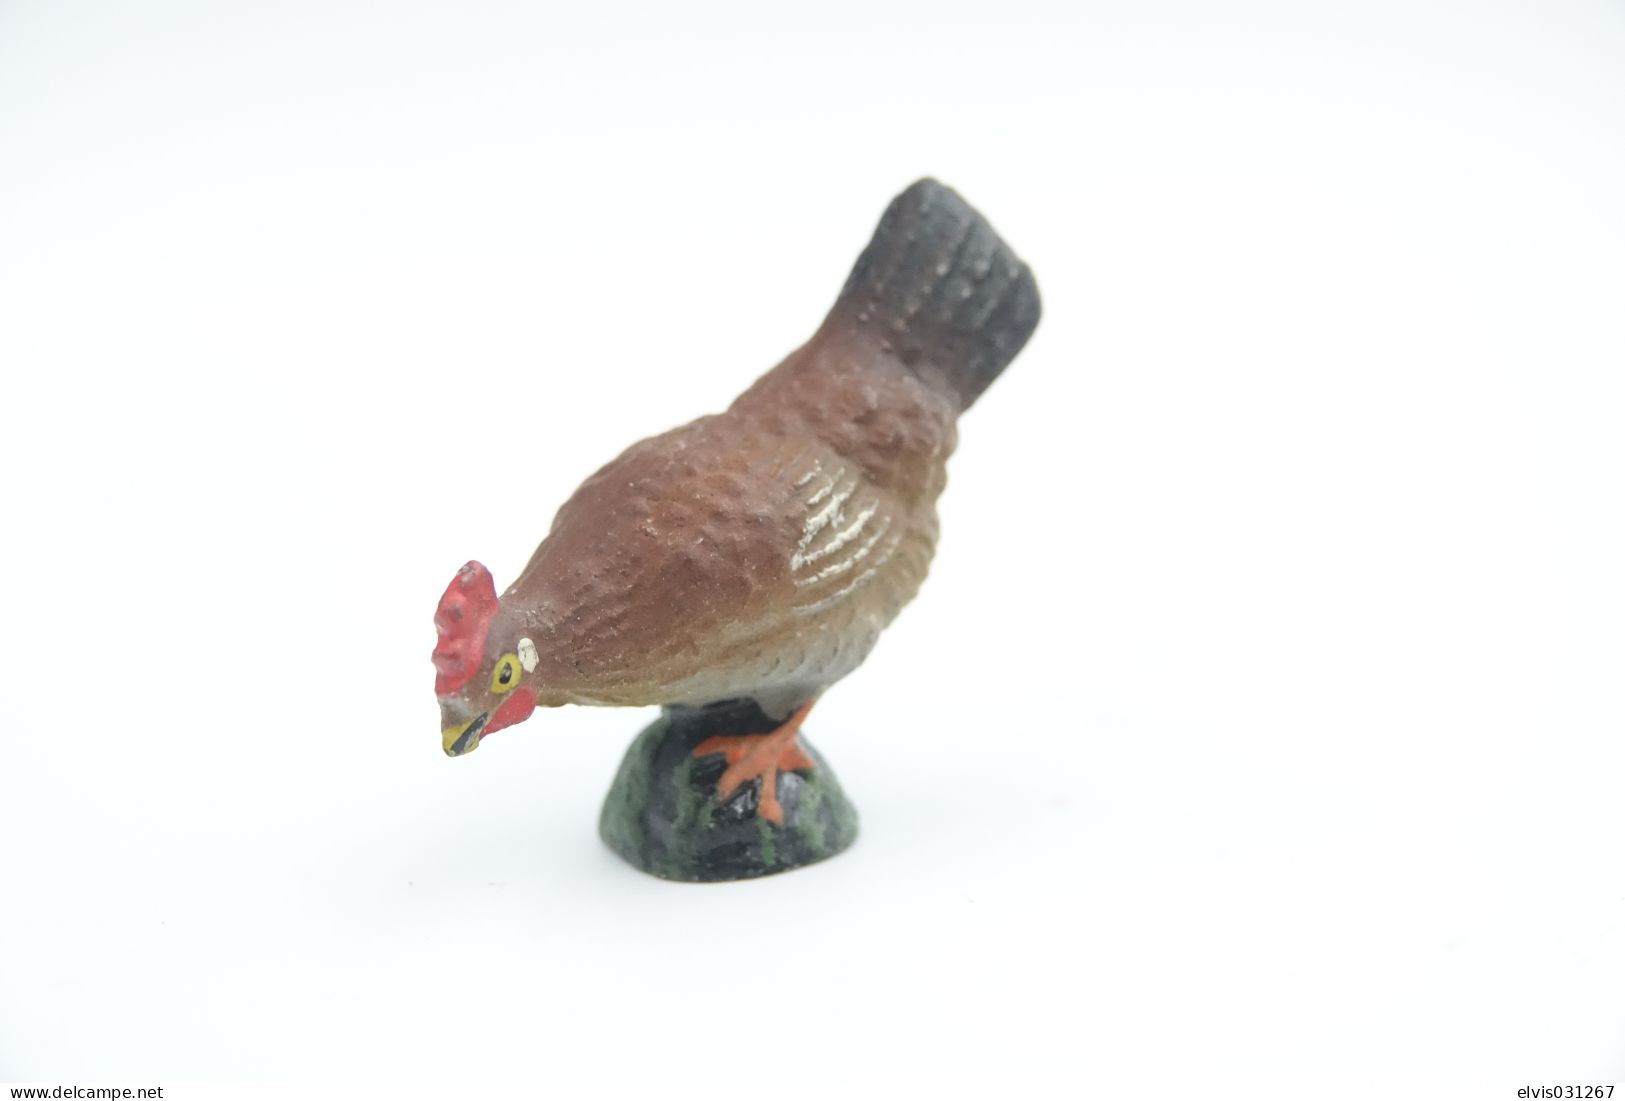 Elastolin, Lineol Hauser, Animals Chicken N°4051, Vintage Toy 1930's - Figuren